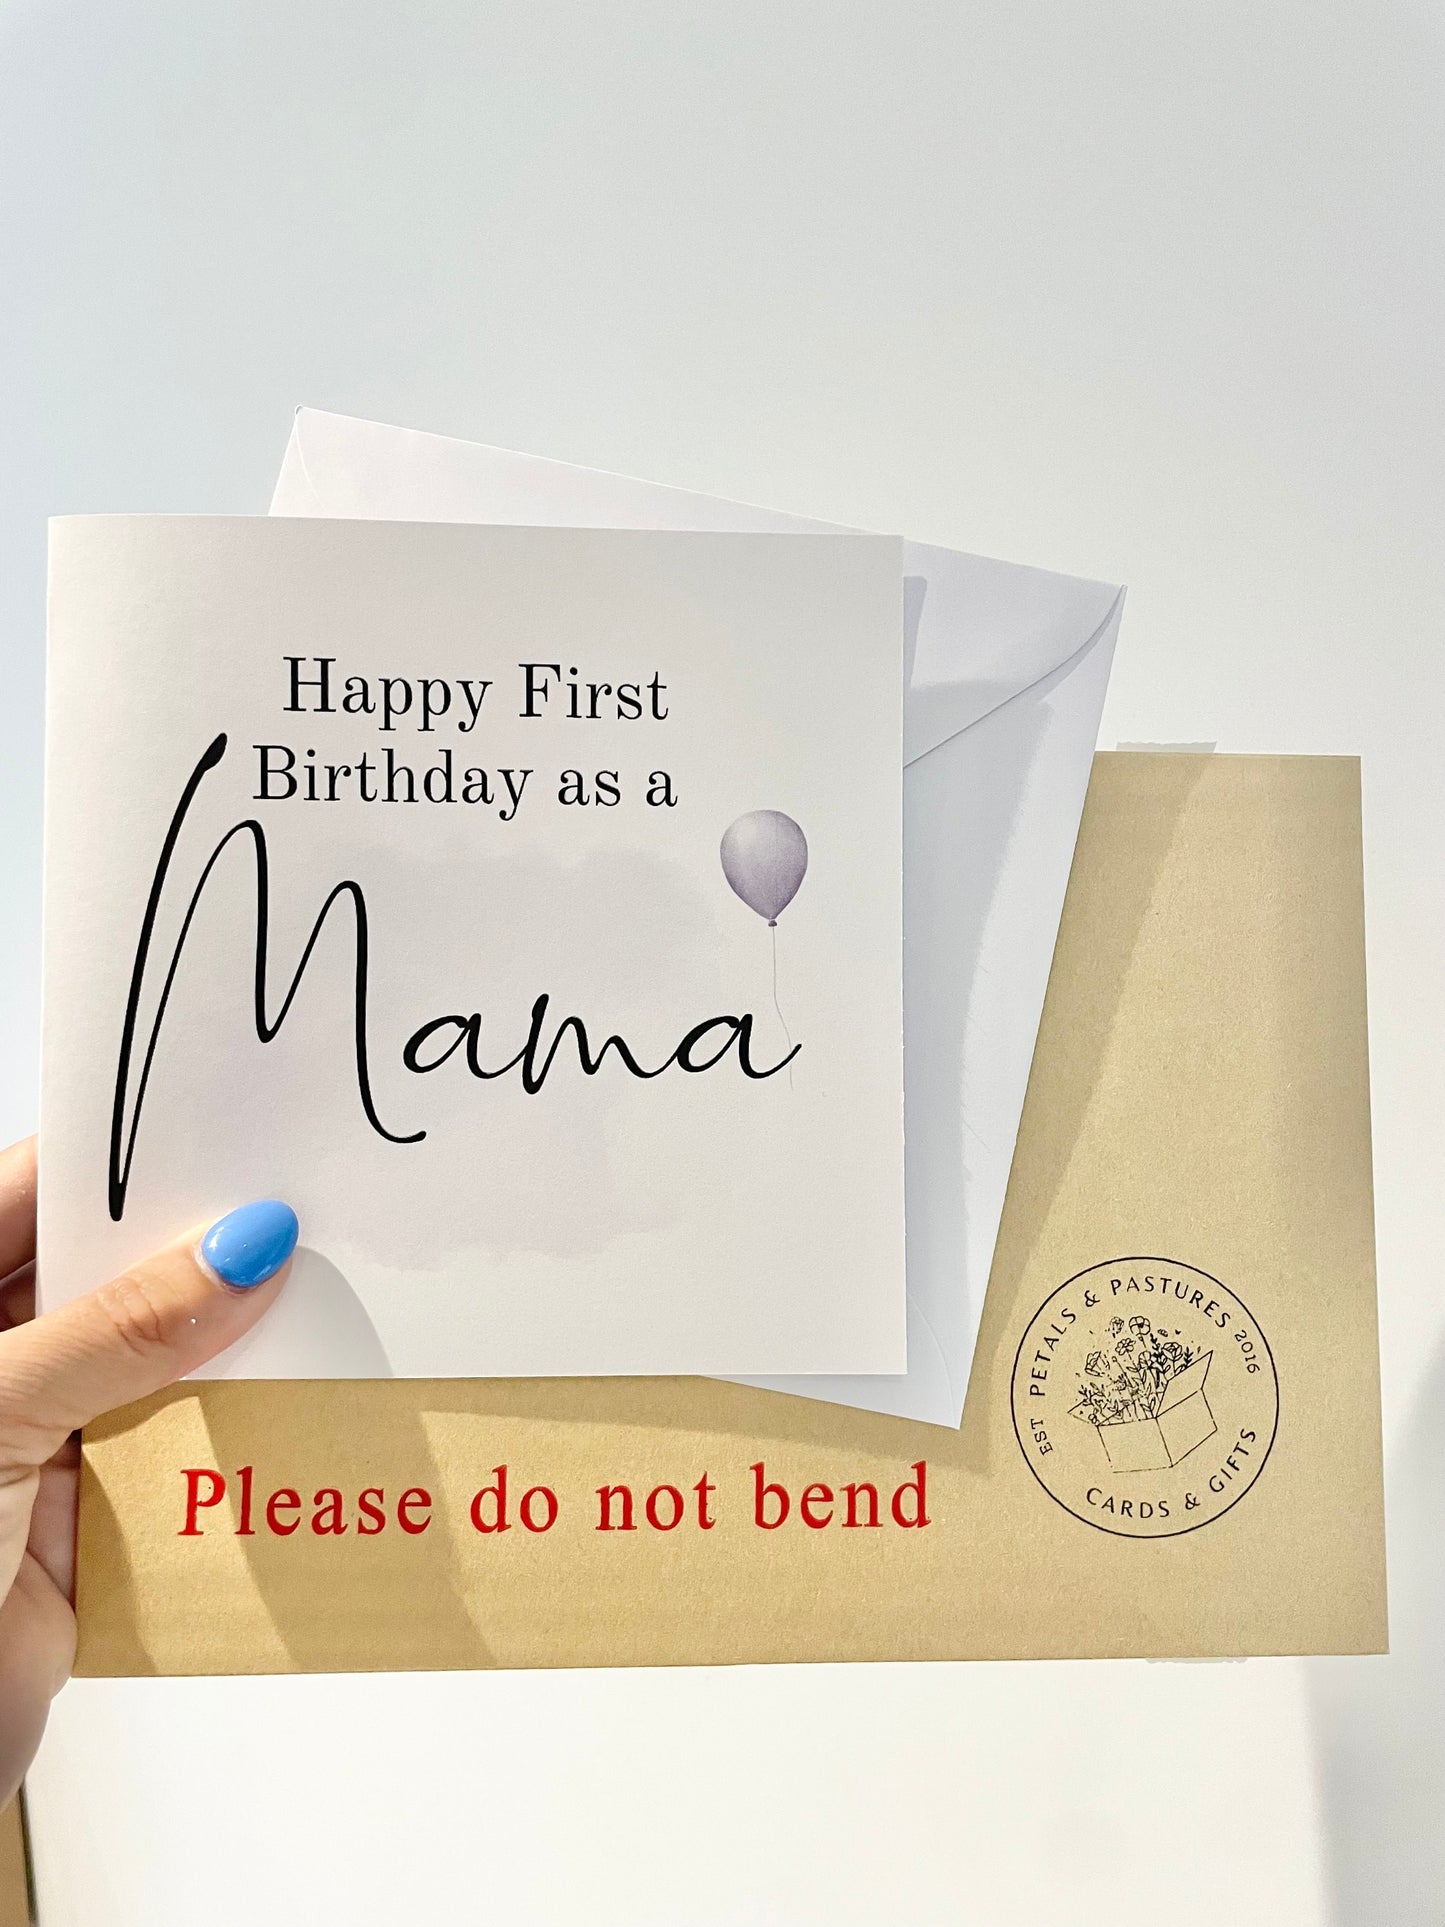 Happy first birthday as a mama, new mum birthday, friend birthday, wife’s 1st bday as a mummy greeting card